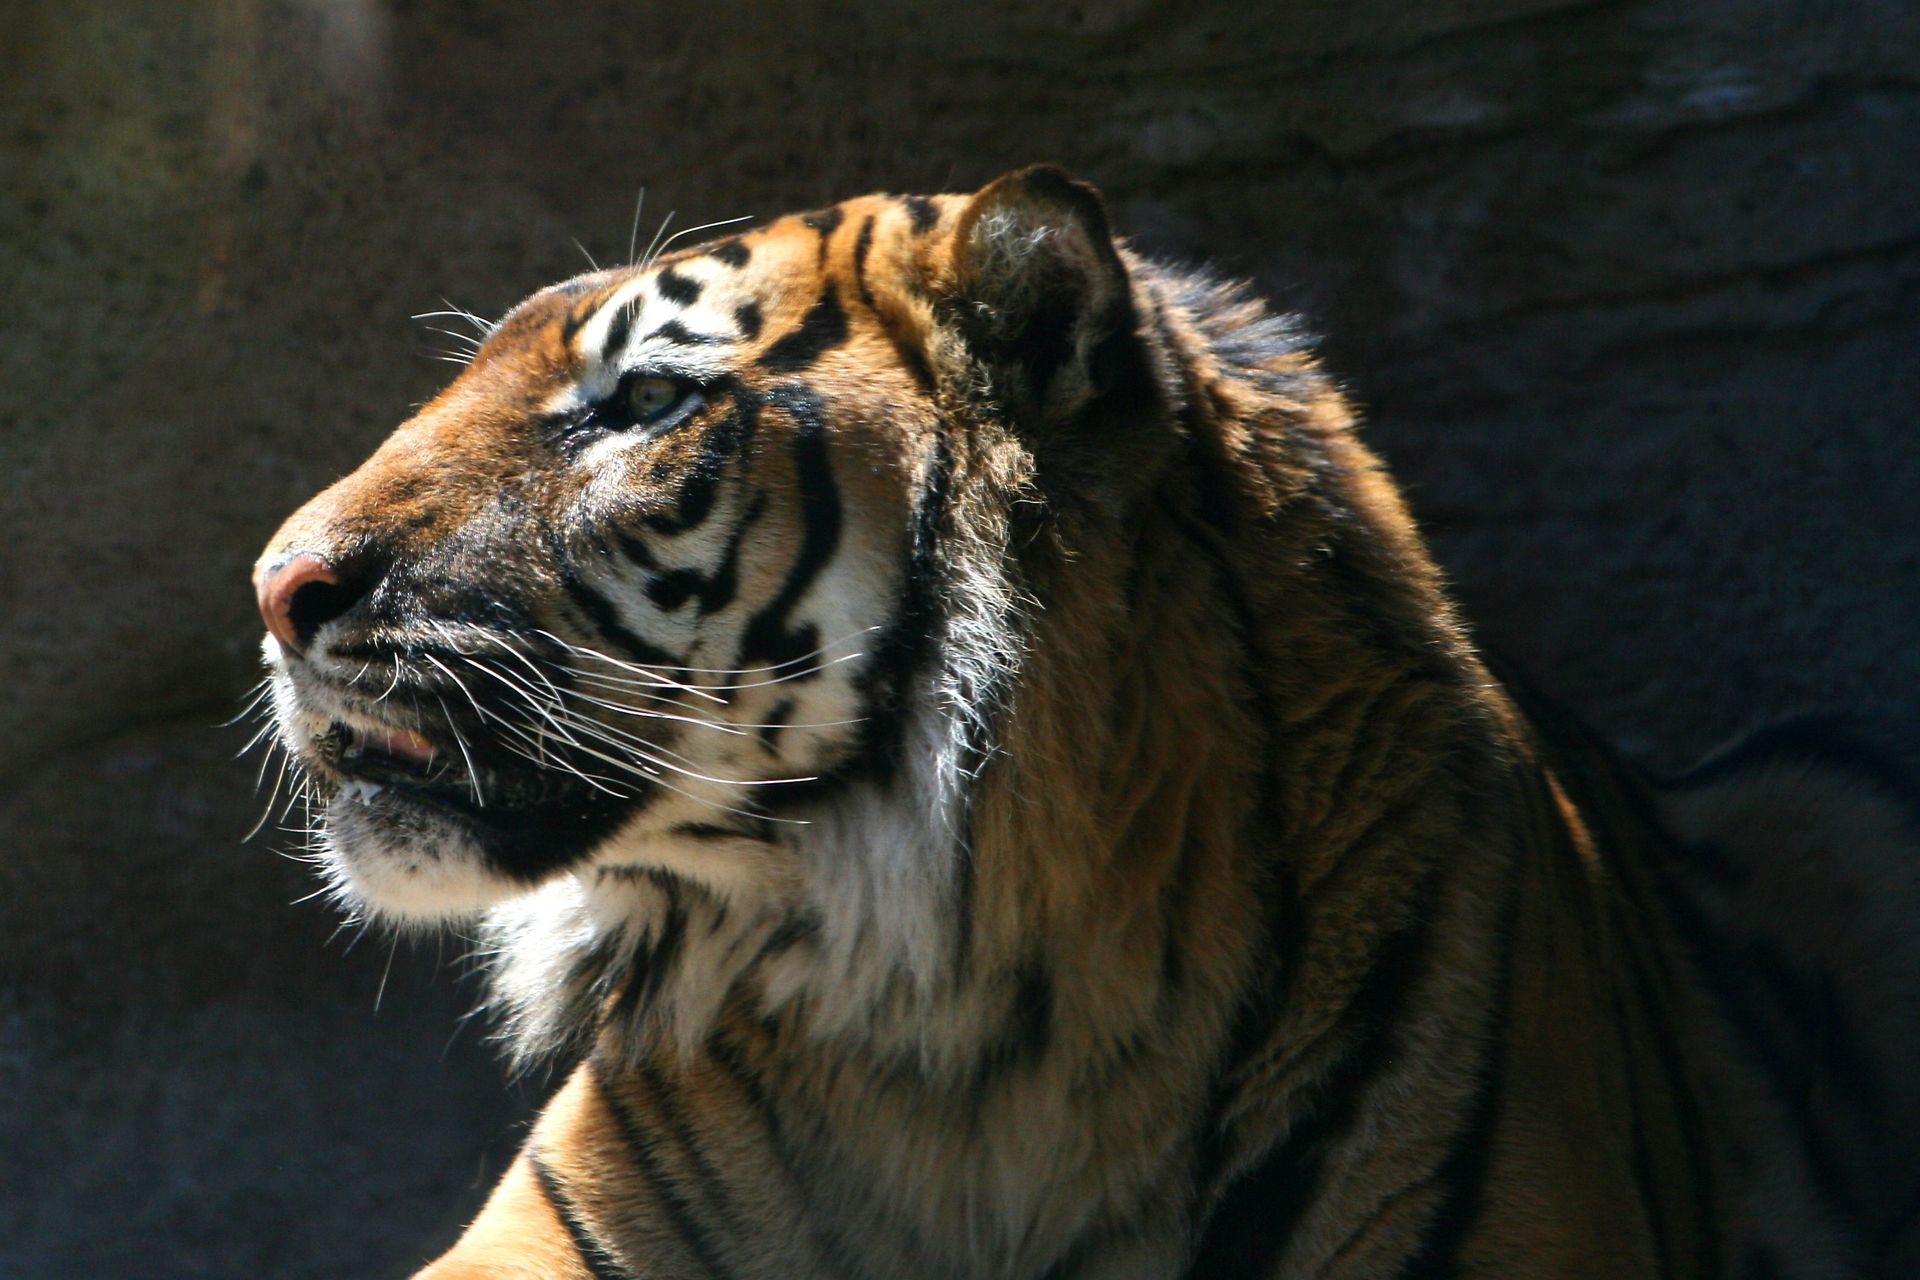 A portrait of a tiger.